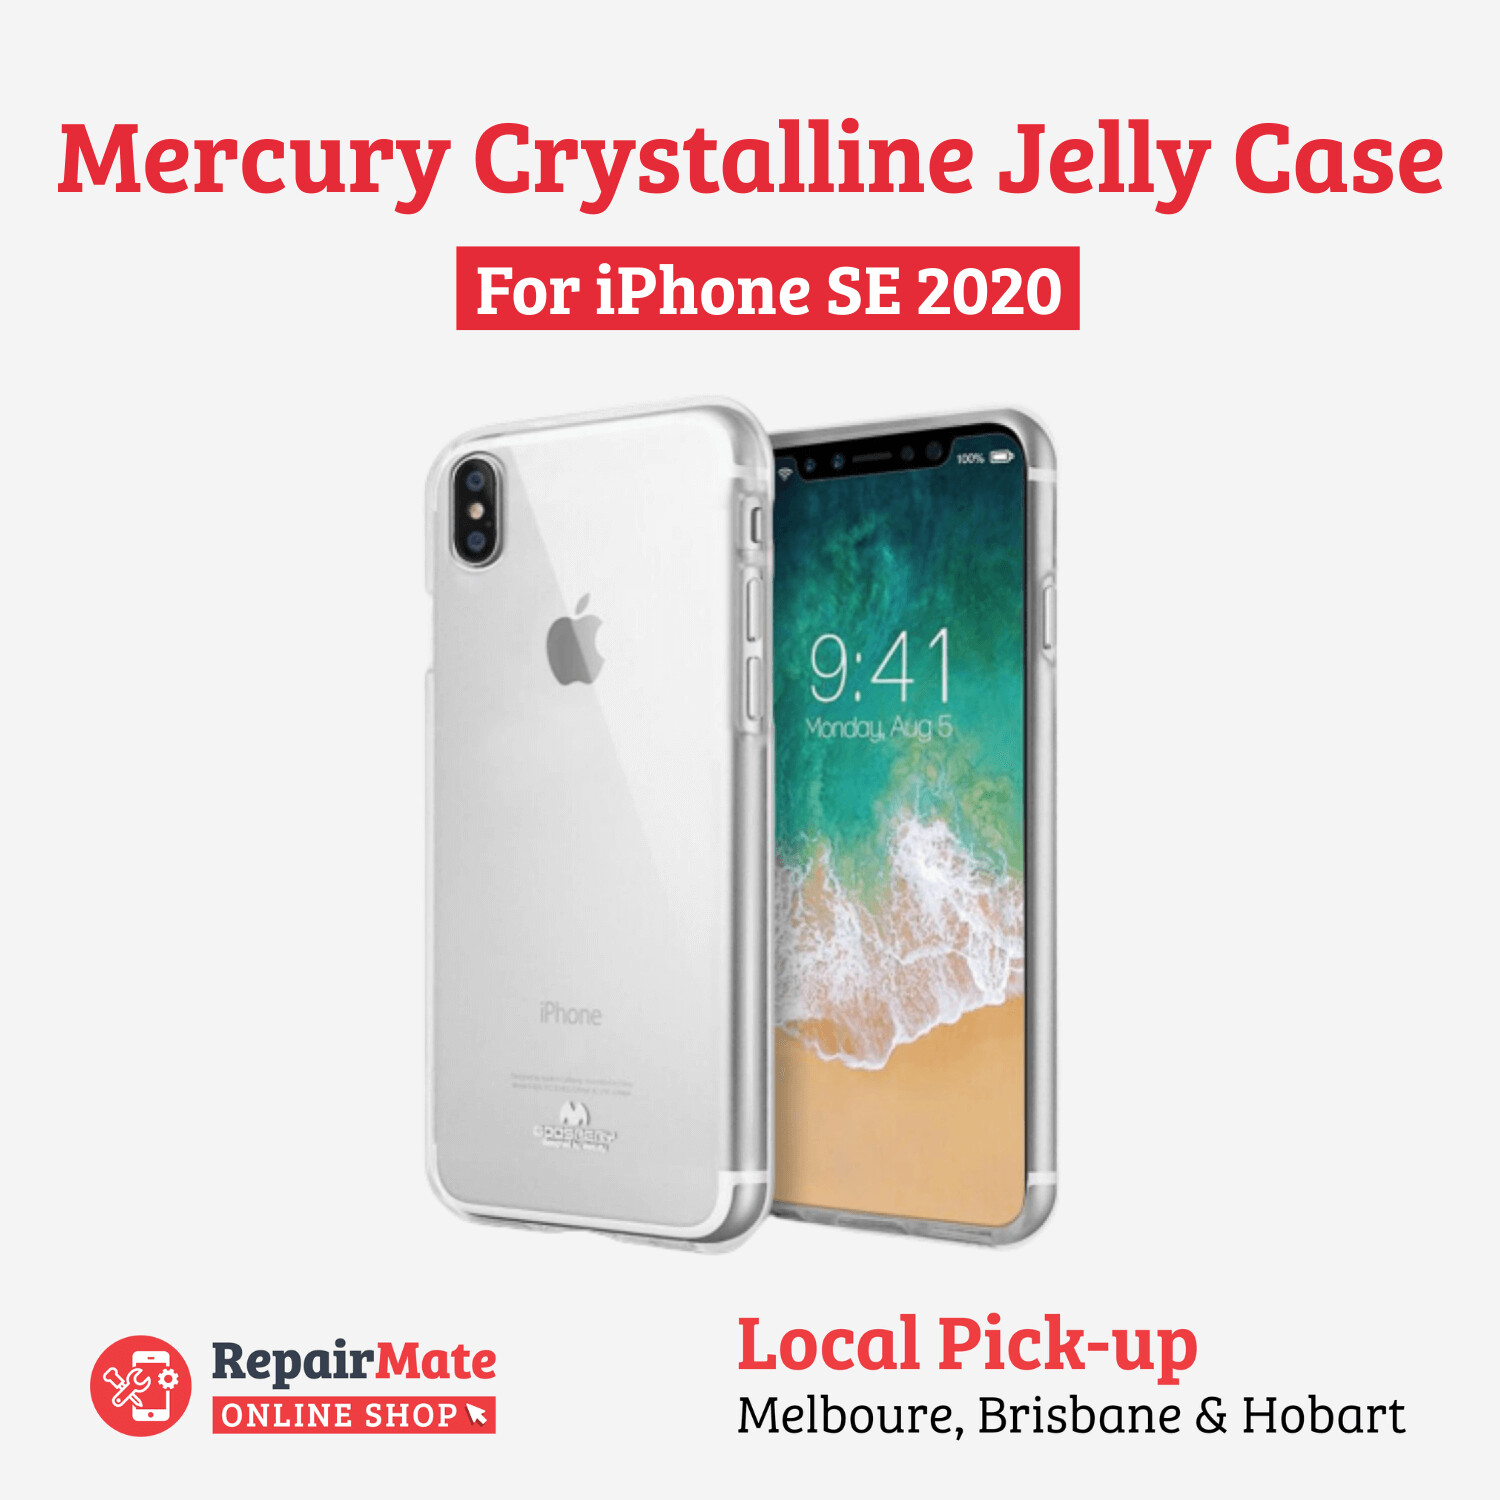 iPhone SE (2020) Mercury Crystalline Jelly Case Cover